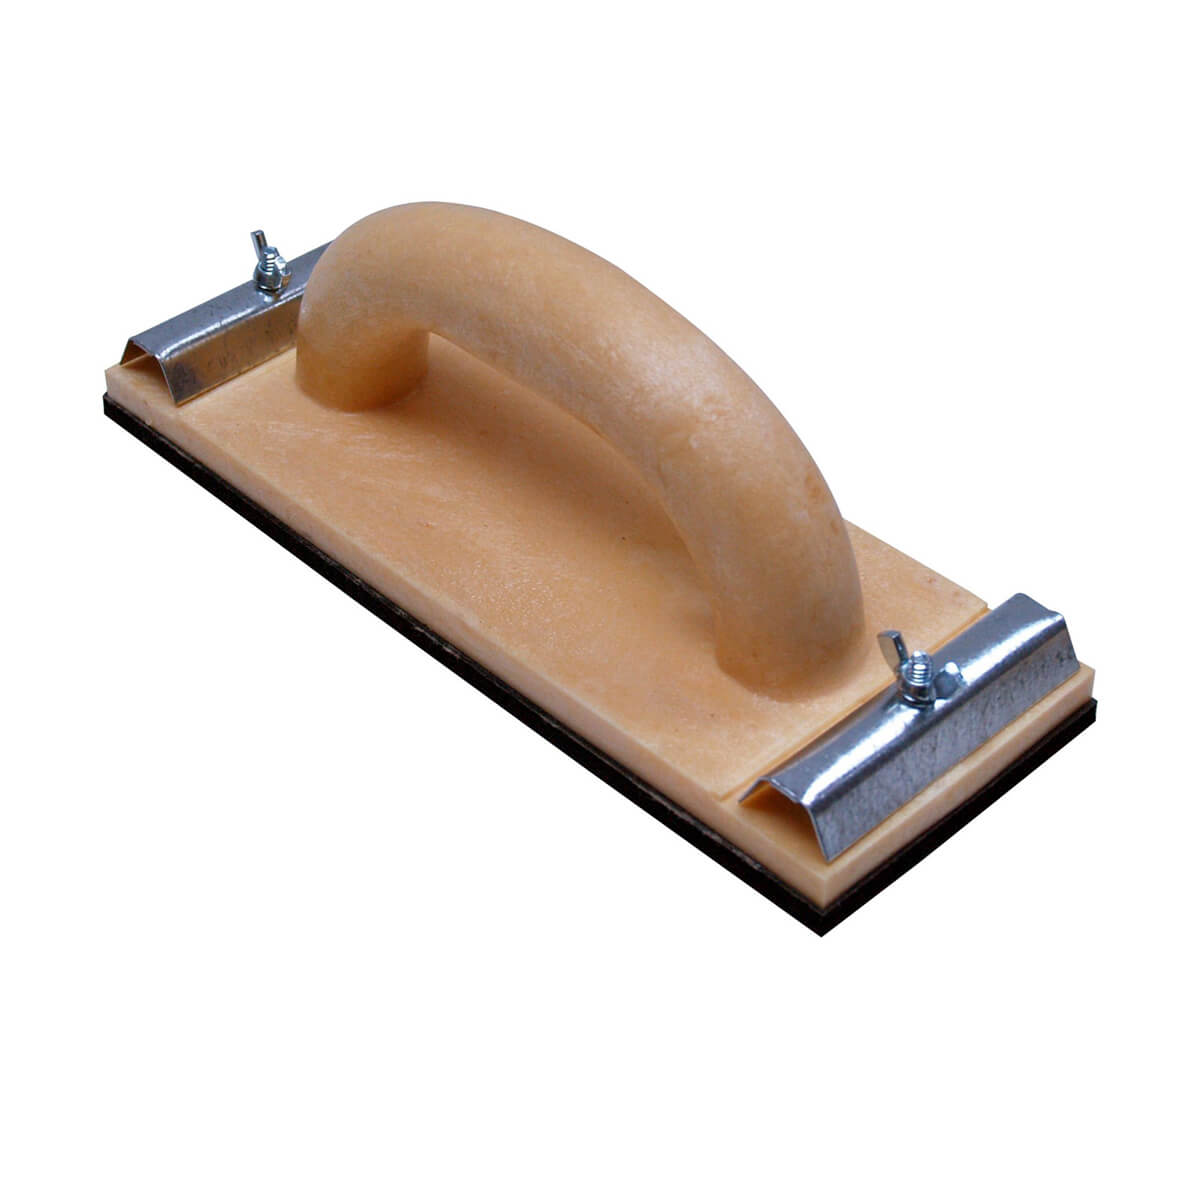 Ergo-Grip Plastic Drywall Hand Sander